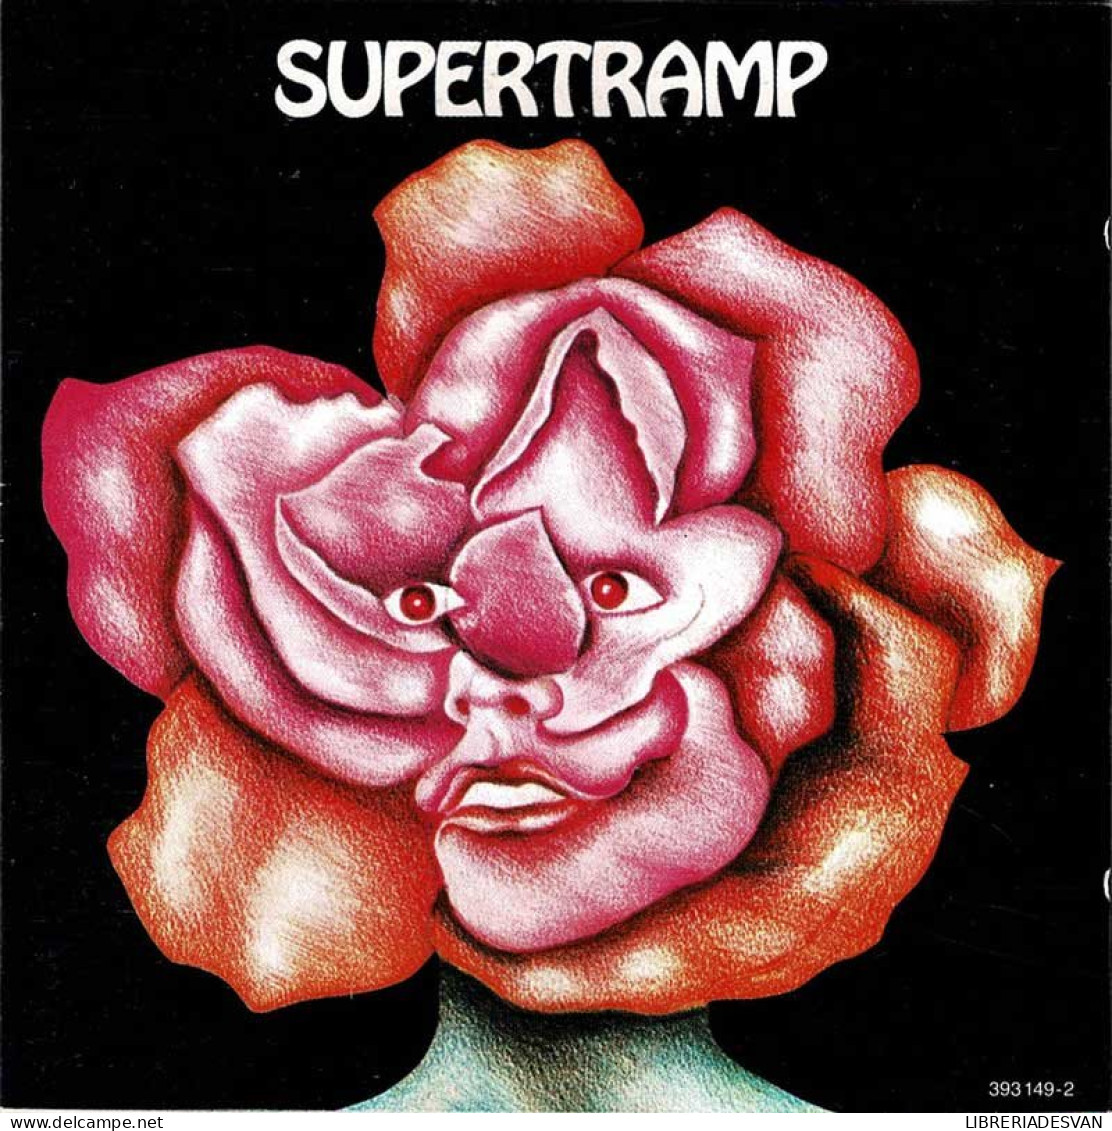 Supertramp - Supertramp. CD - Rock